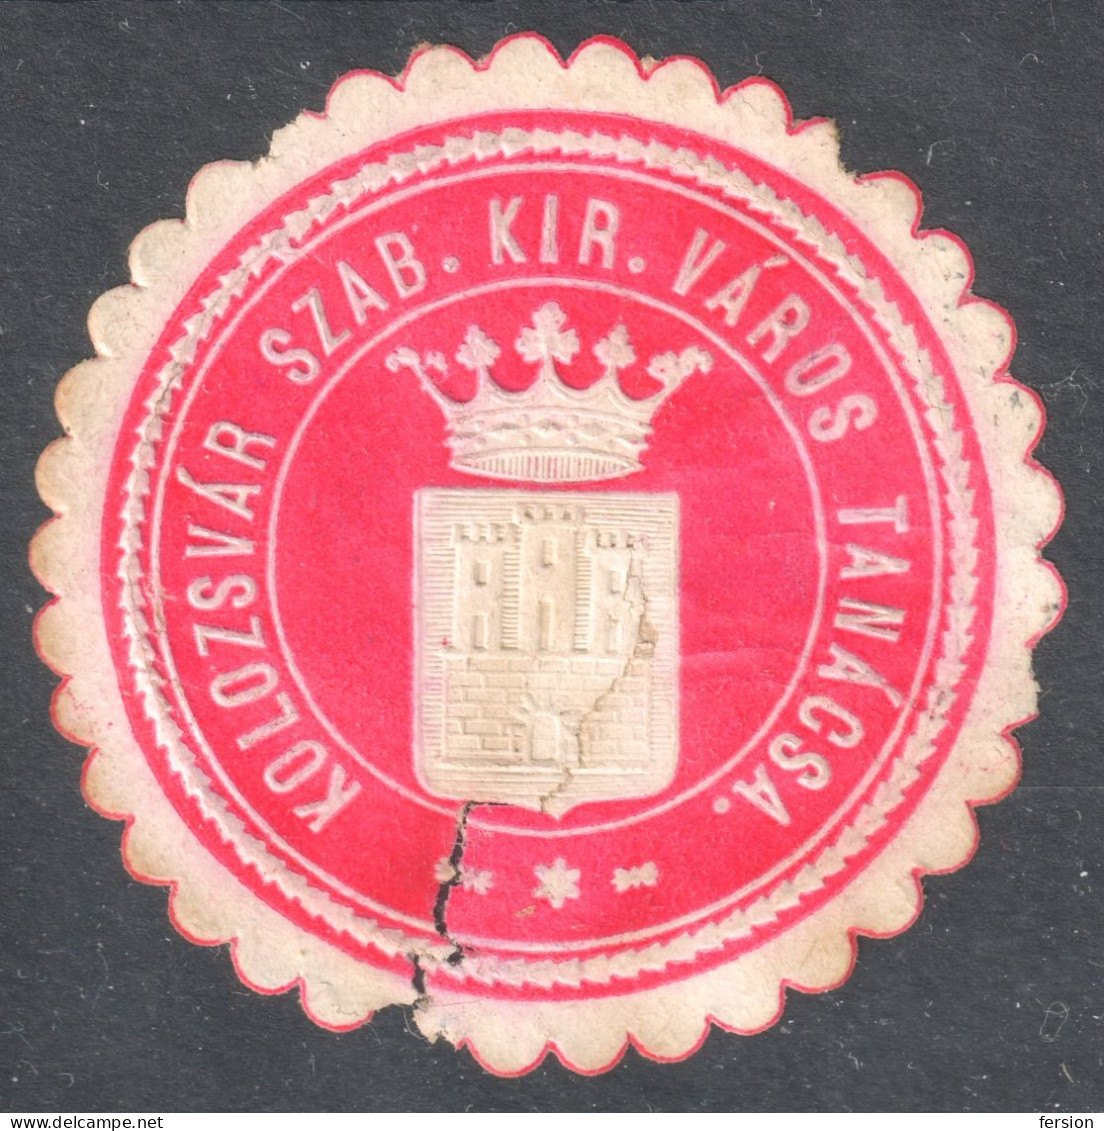 CLUJ Kolozsvár Coat Of Arms CITY COUNCIL - Transylvania Erdély / Cover Letter Close LABEL CINDERELLA VIGNETTE 1910 - Transylvania